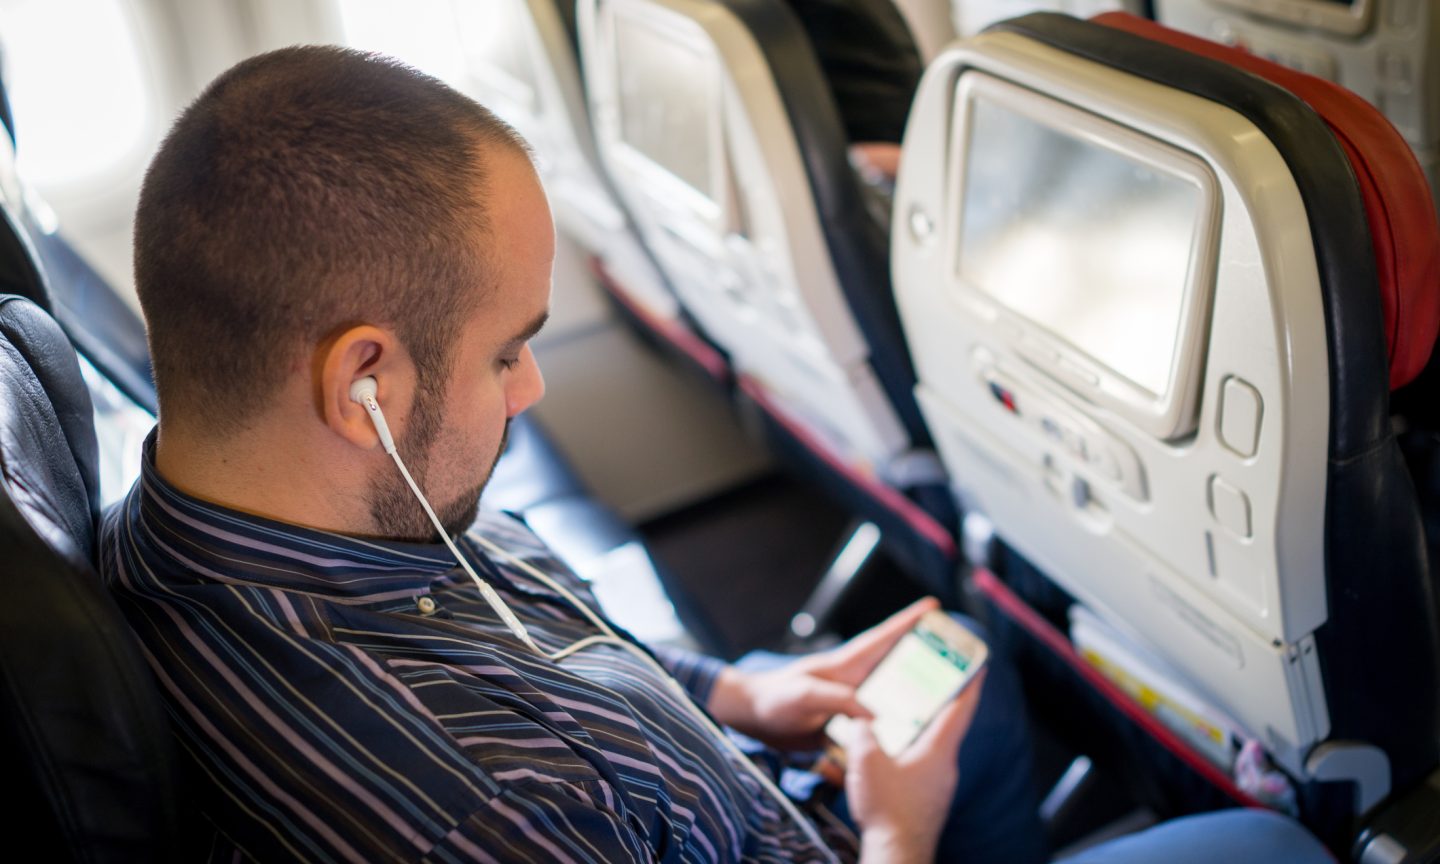 Emirates Wi-Fi: What to Know – NerdWallet